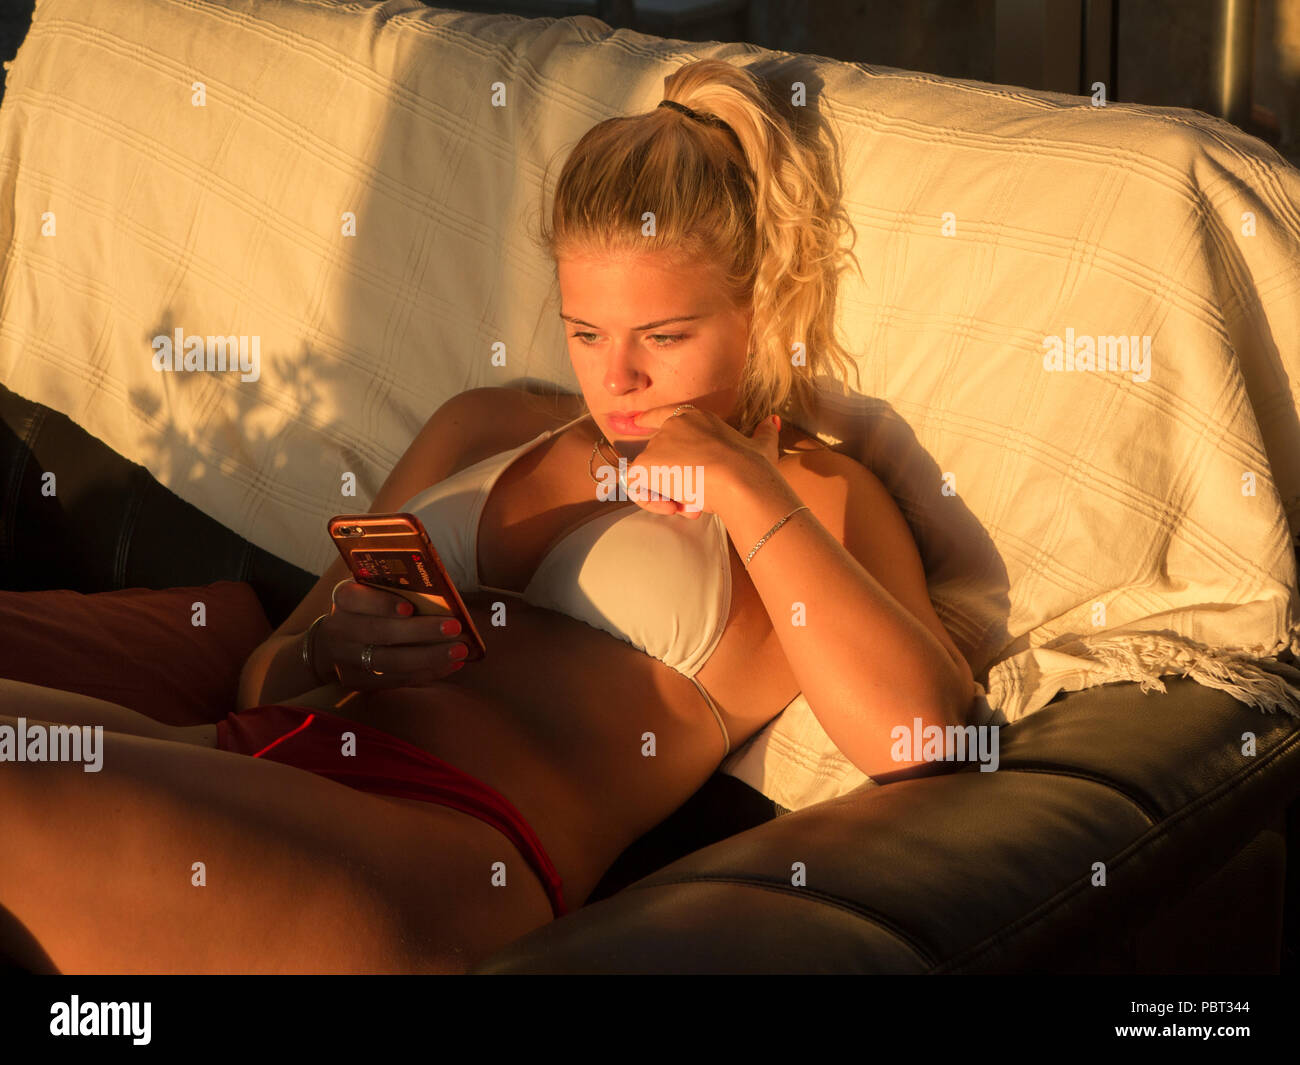 Young Teenager Girl in Bikini Stock Image - Image of pretty, blonde:  40367105